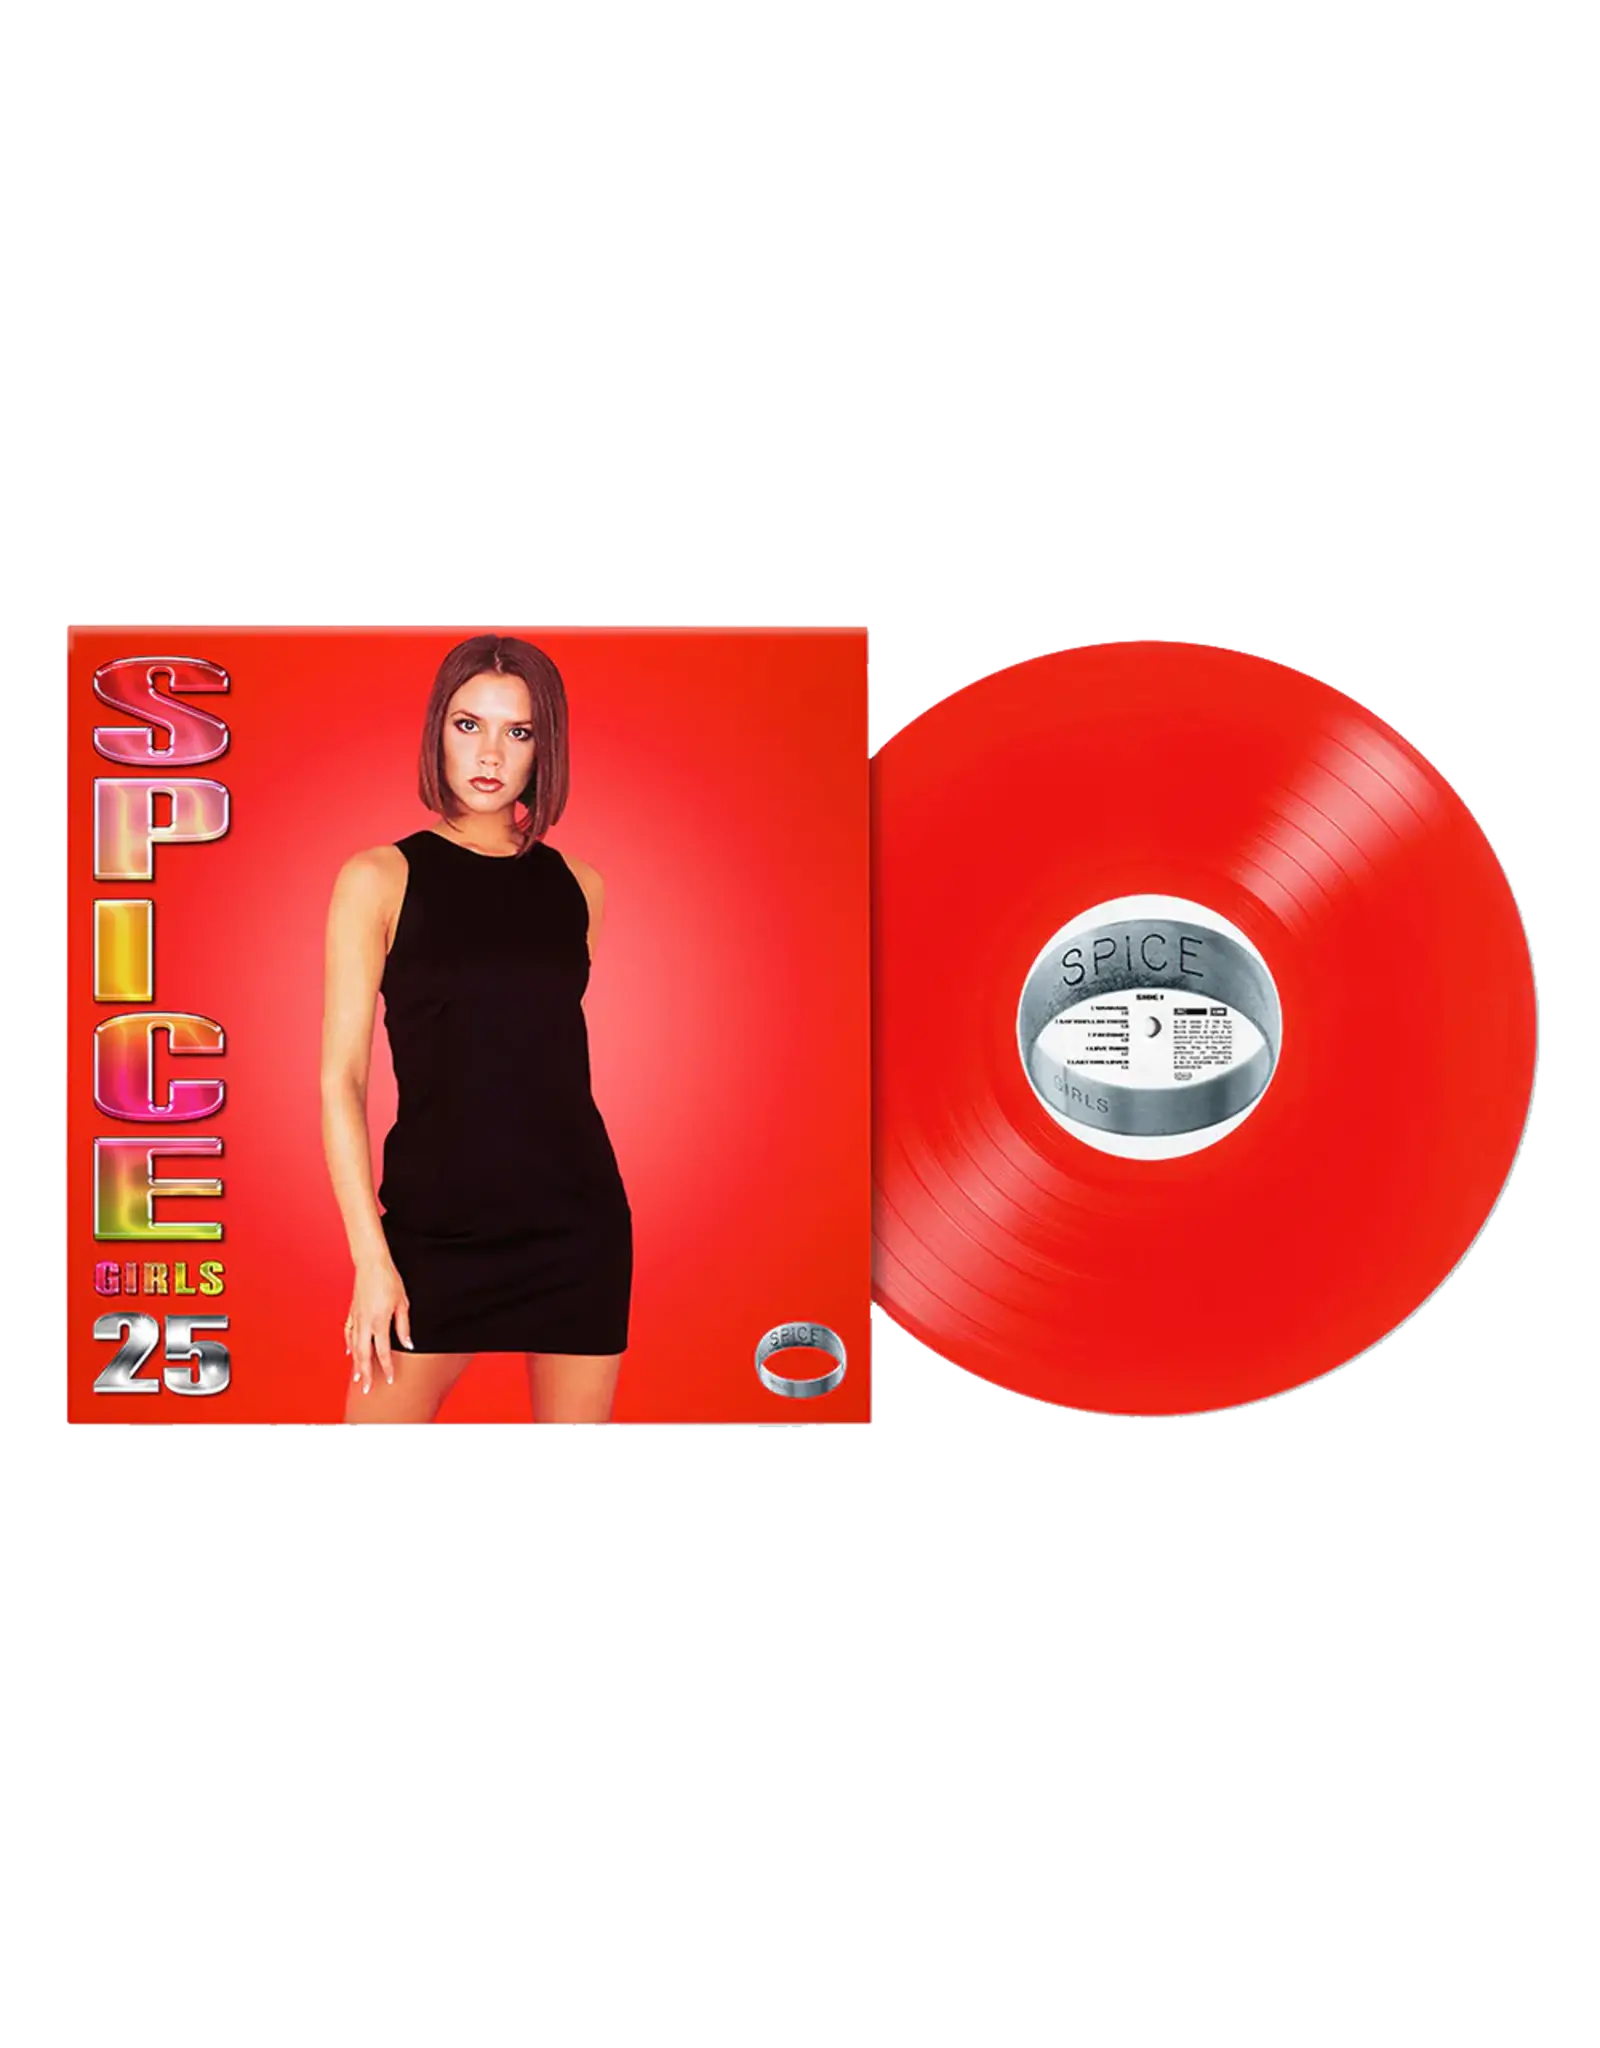 Spice Girls - Spice (25th Anniversary) (Posh Red Vinyl)